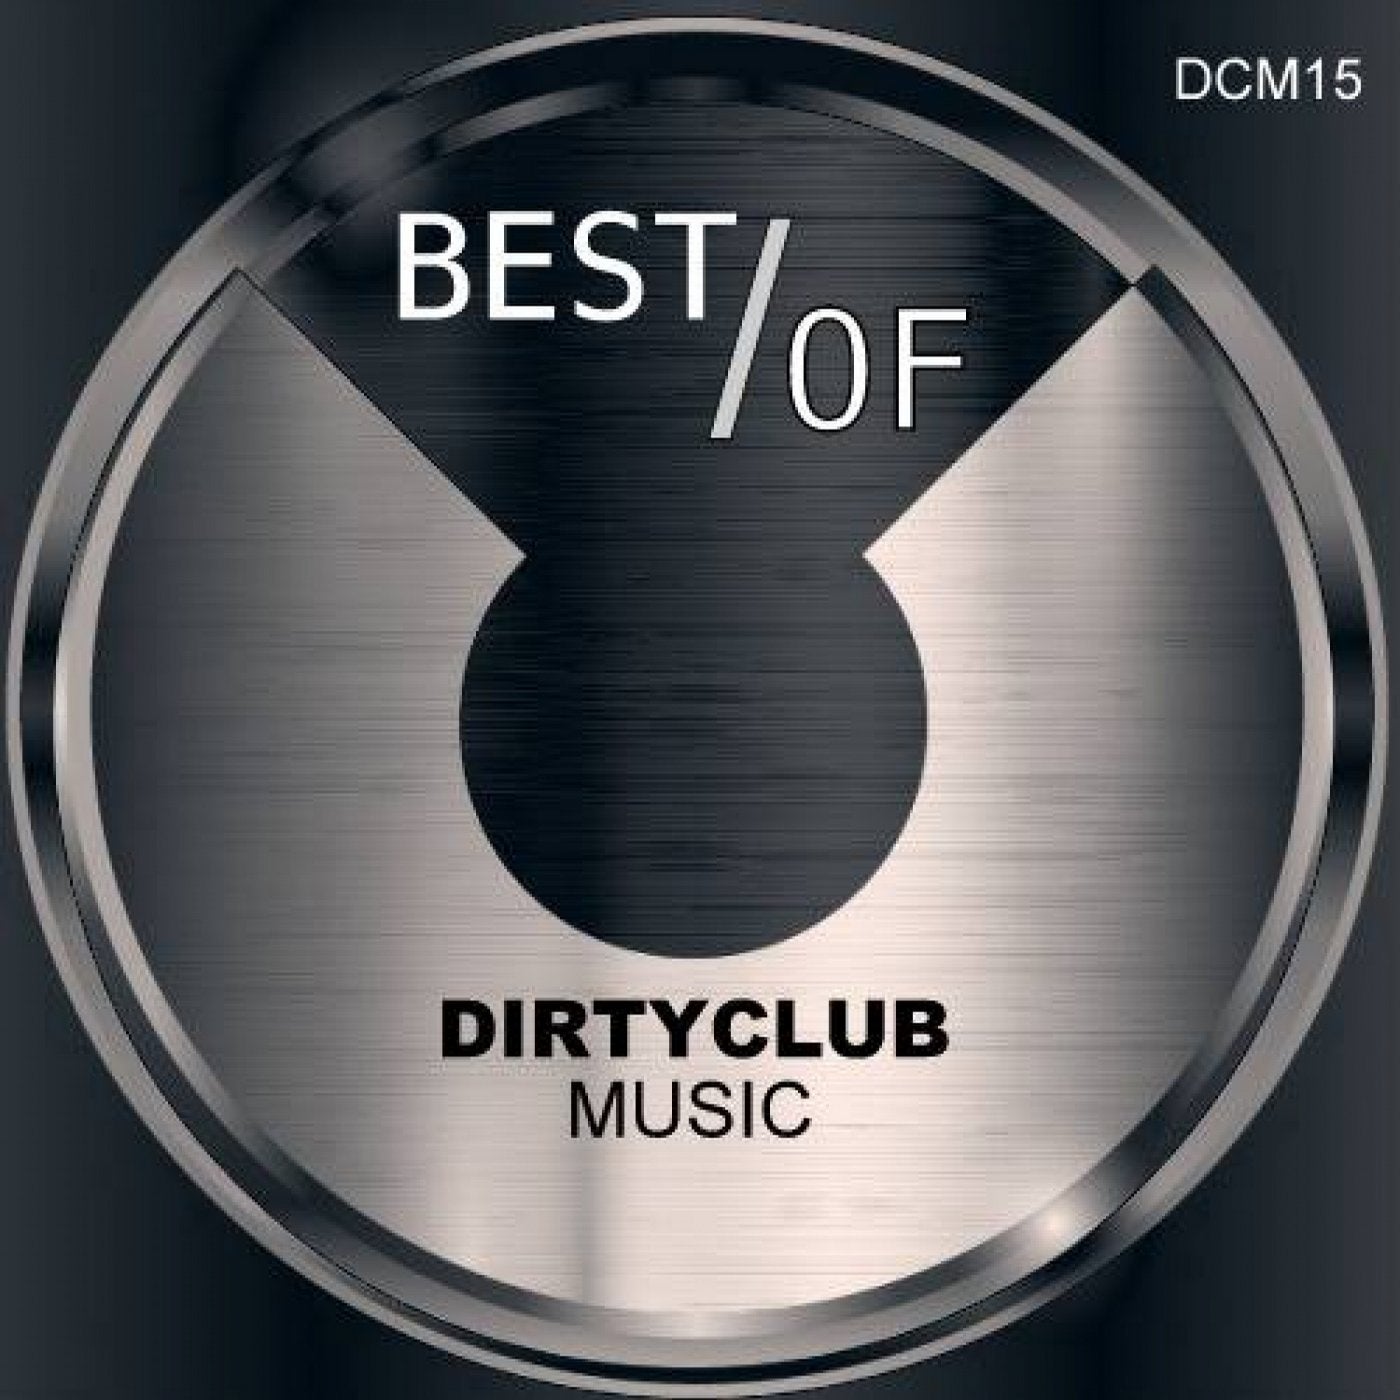 Best Of Dirtyclub Music